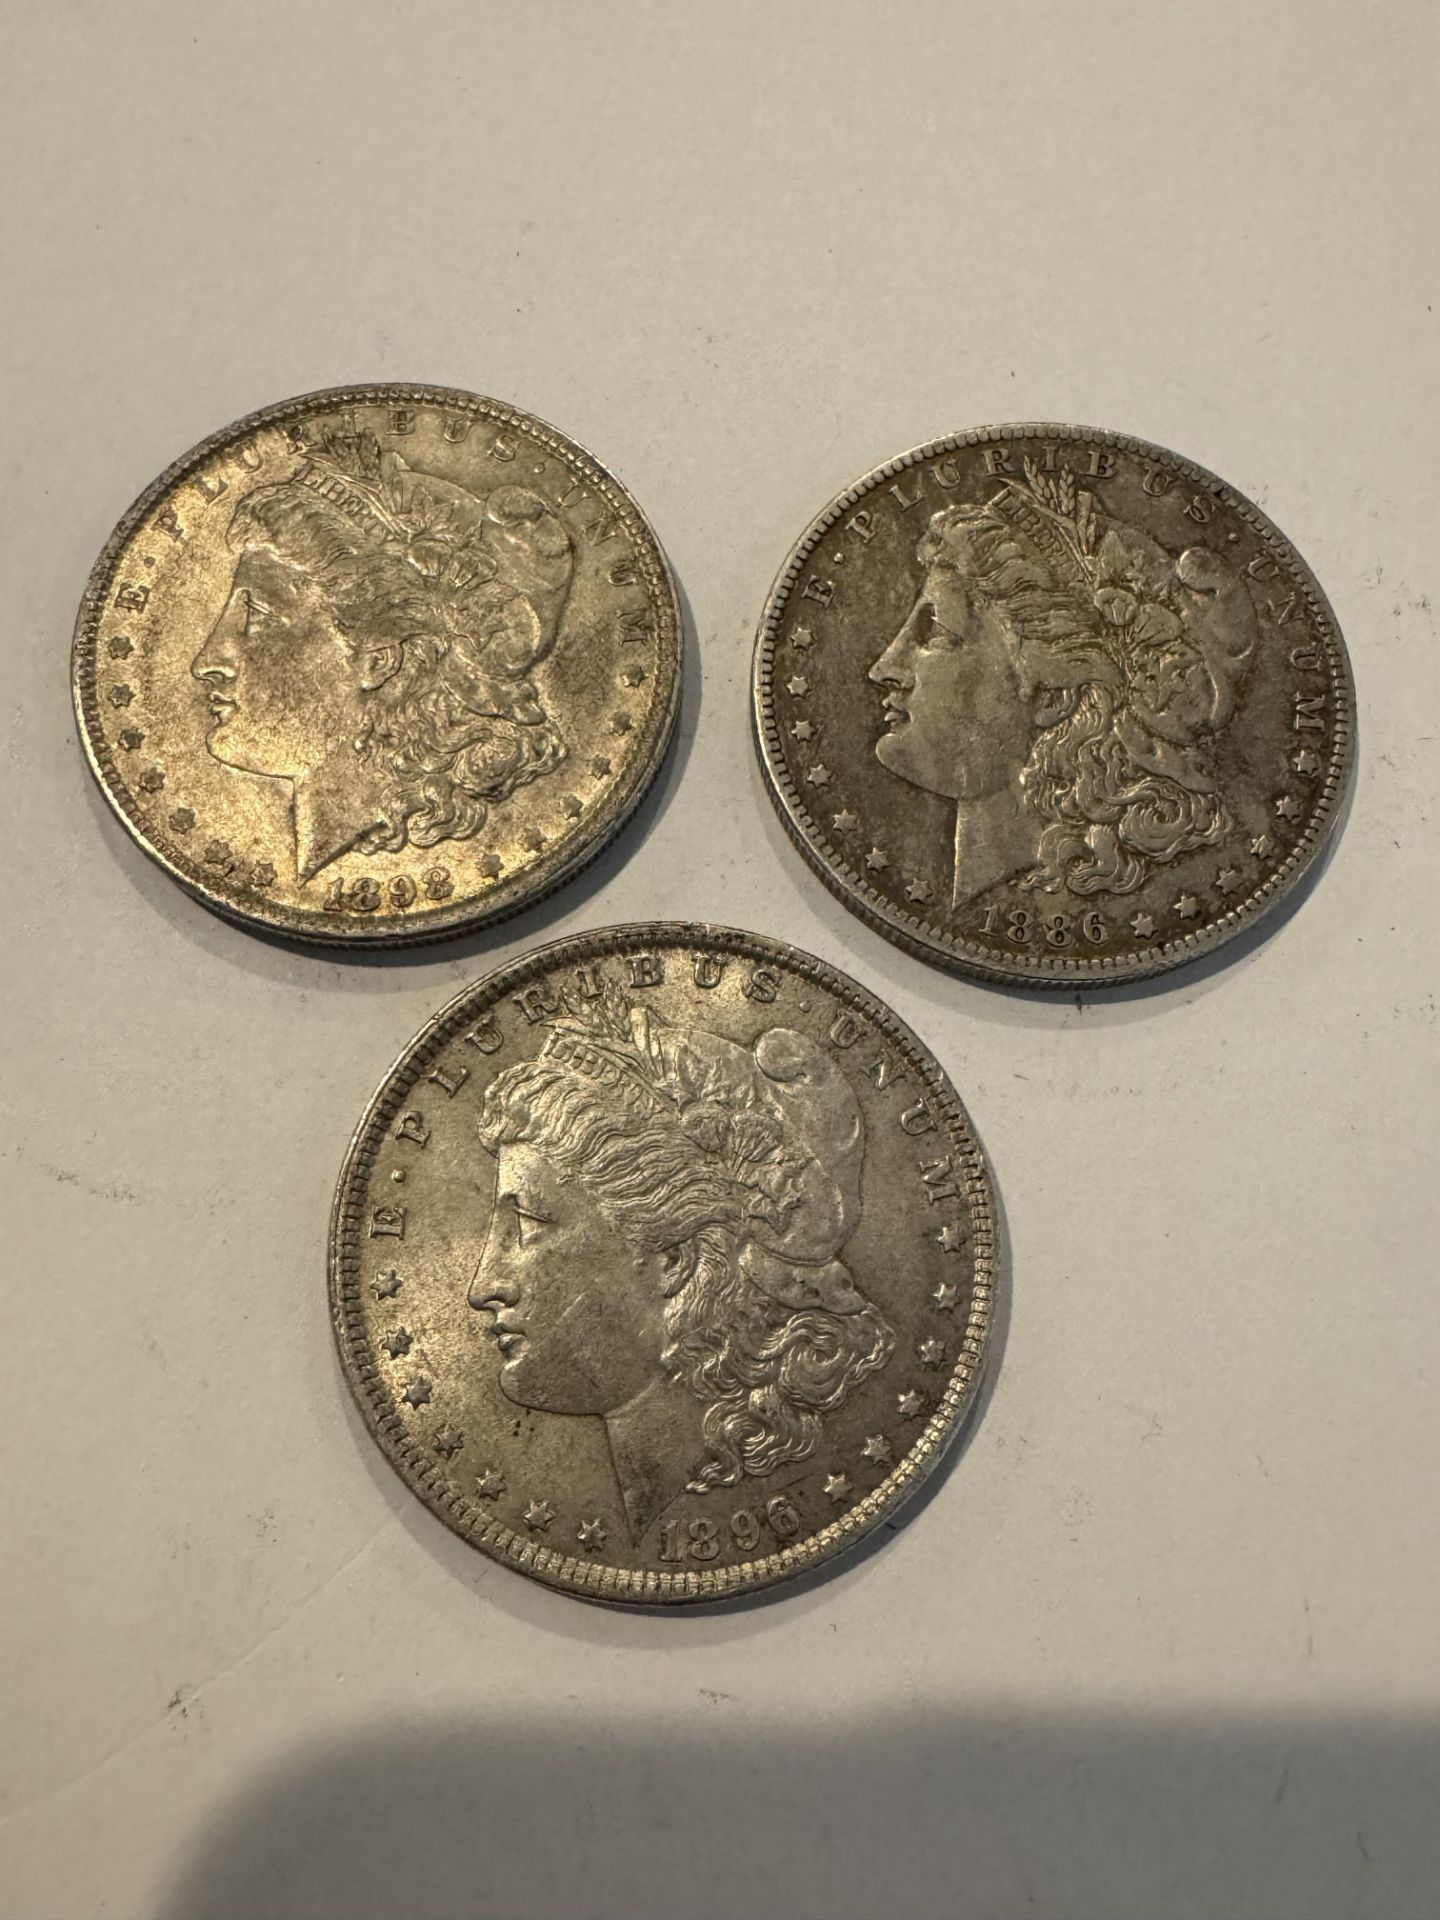 US $1 Dollar silver coin (1886/1896/1898)